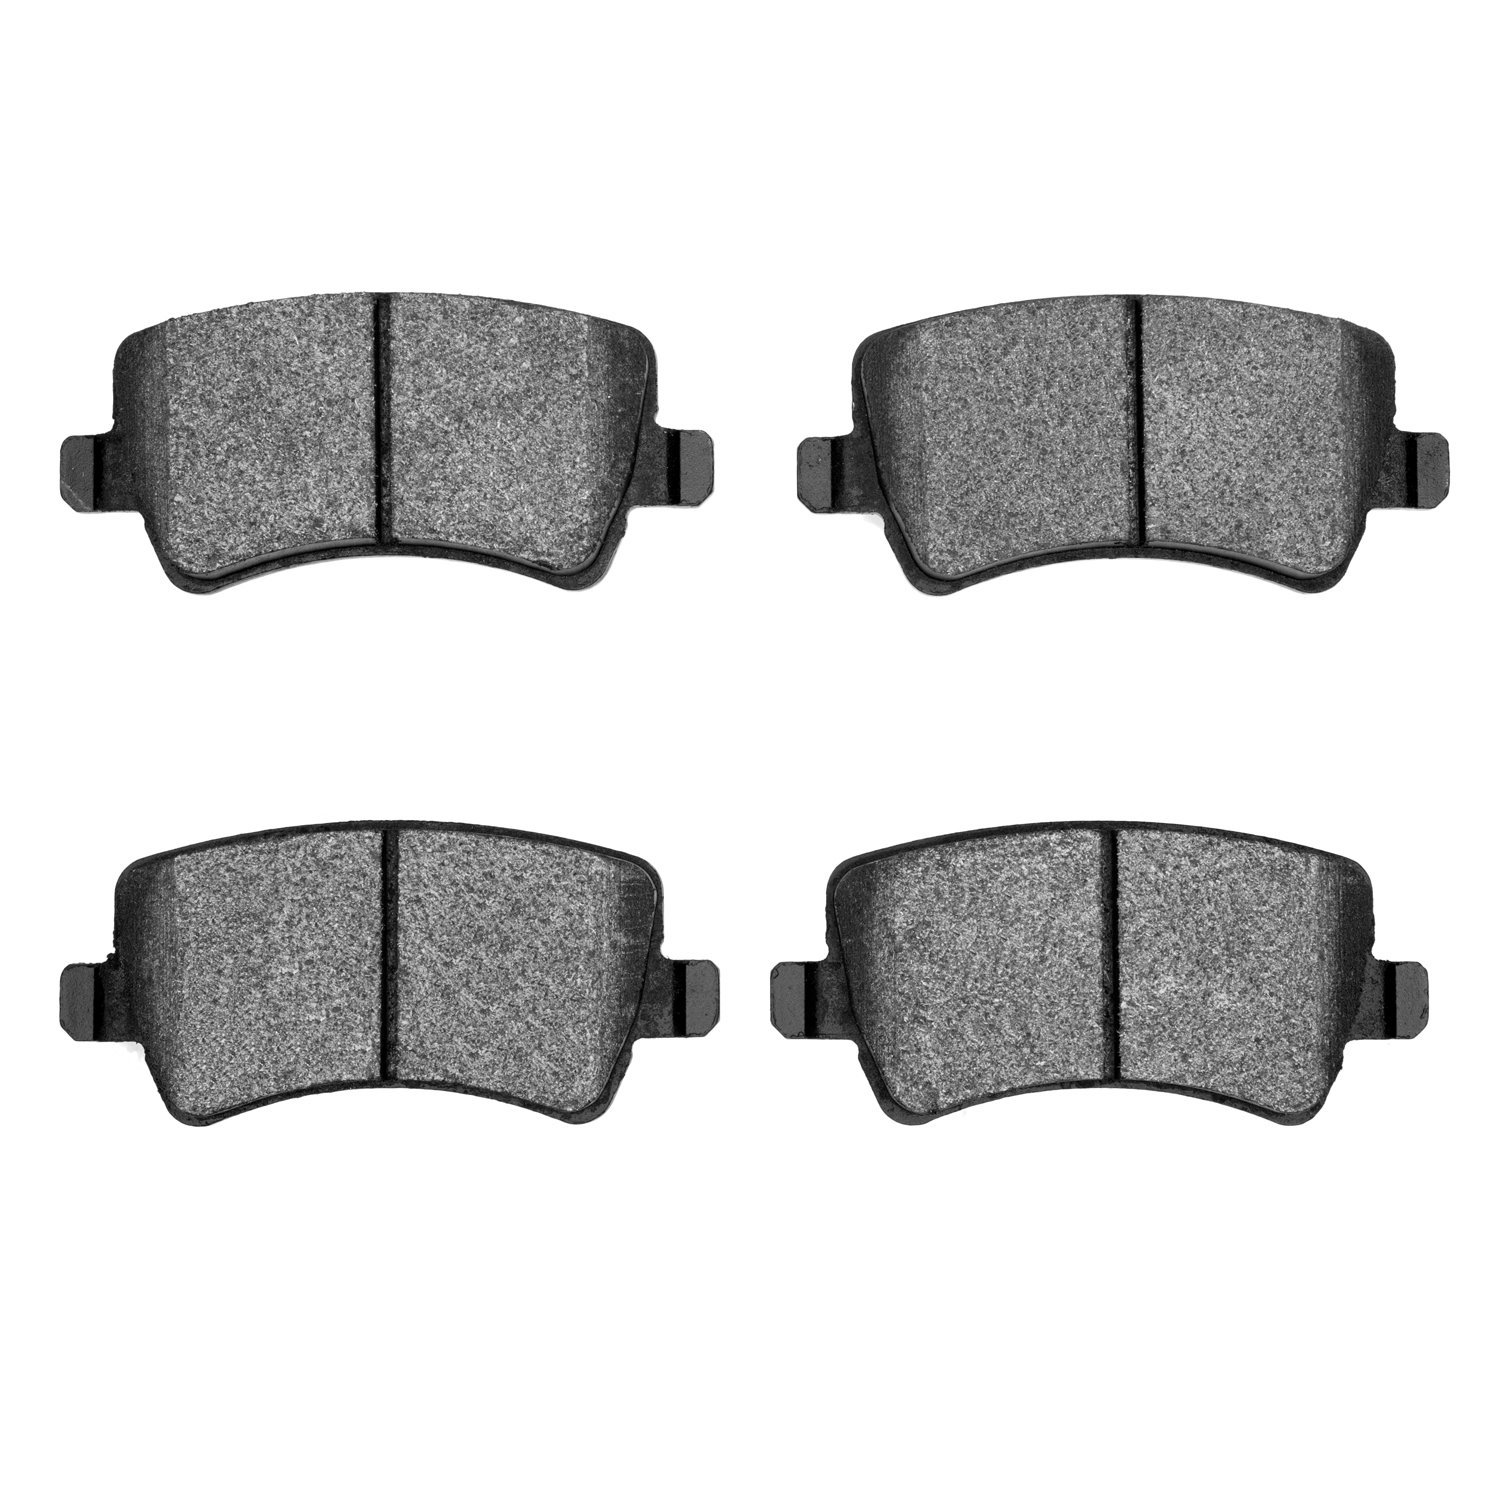 1310-1307-00 3000-Series Ceramic Brake Pads, 2007-2018 Multiple Makes/Models, Position: Rear